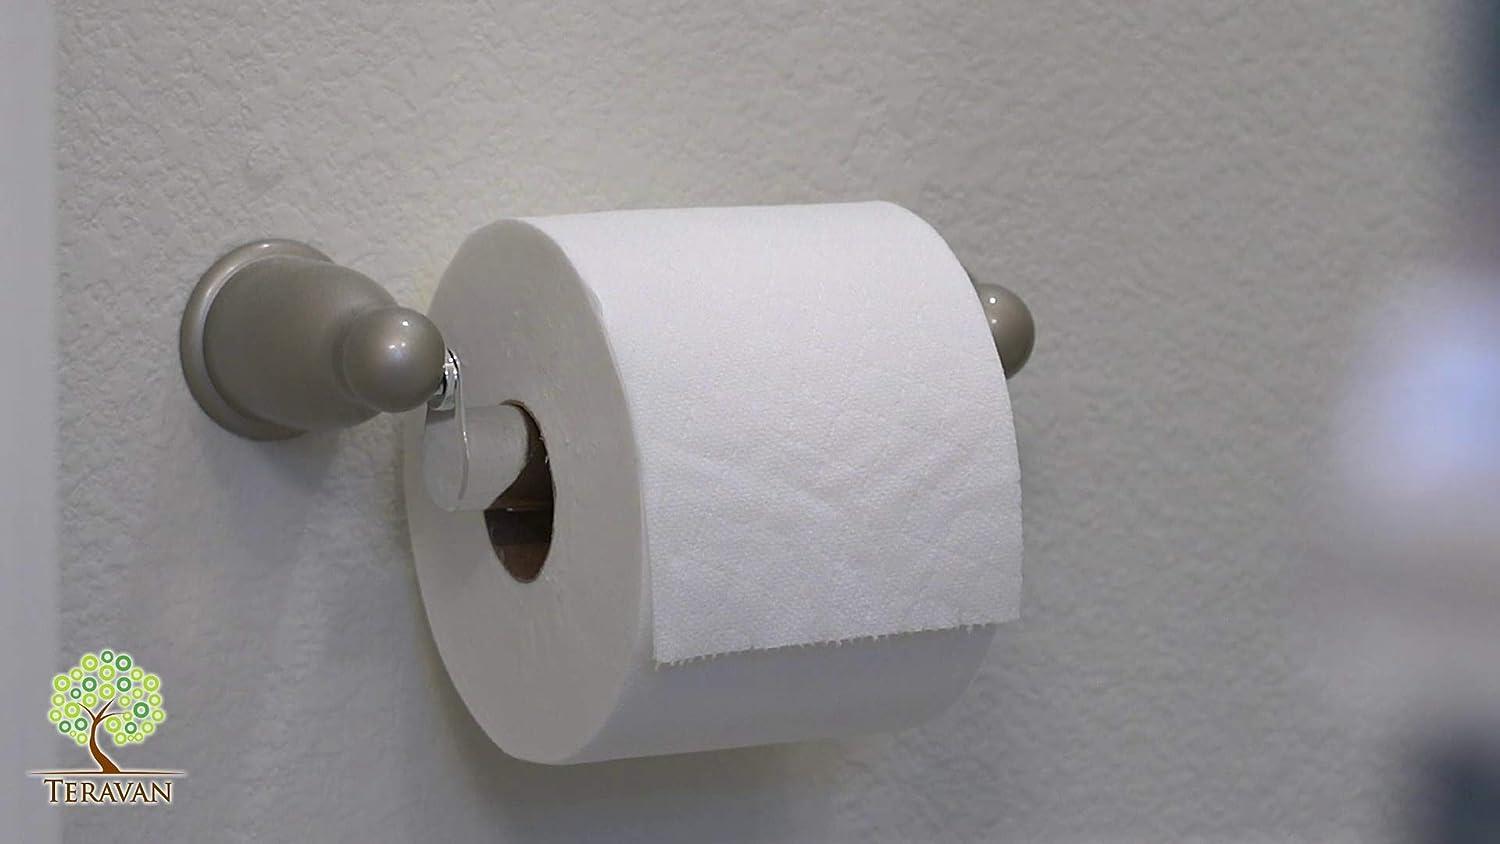 Teravan Standard Extender for Extra Large Toilet Paper, Allows